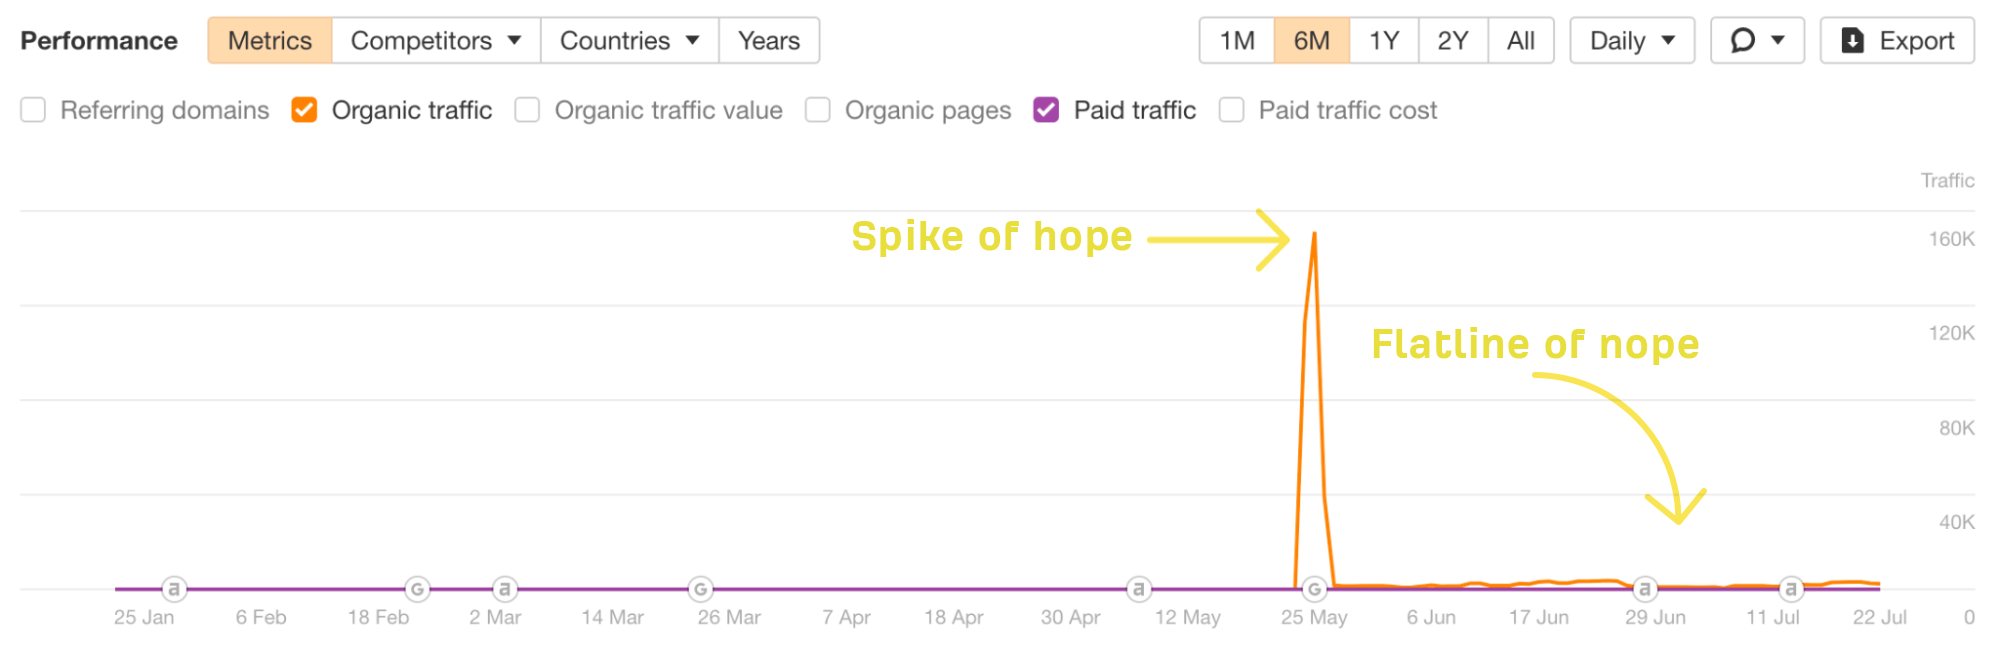 Spike of hope vs. flatline of nope
